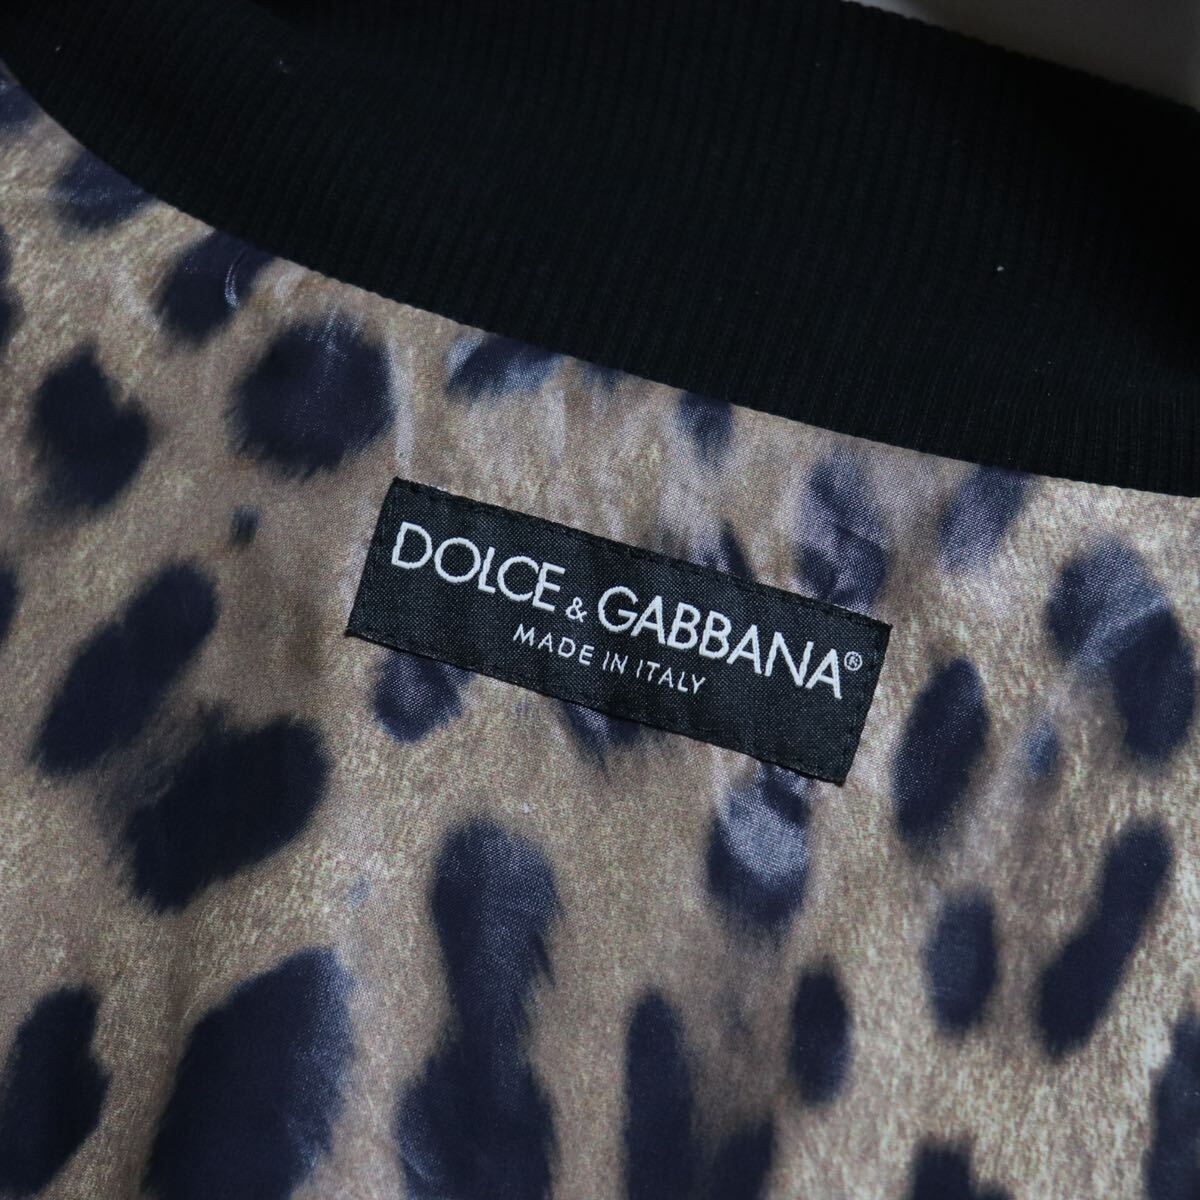  rare [DOLCE&GABBANA Dolce & Gabbana ]MUAYTHAIme Thai / Zip jacket blouson / jersey windbreaker / leopard print 